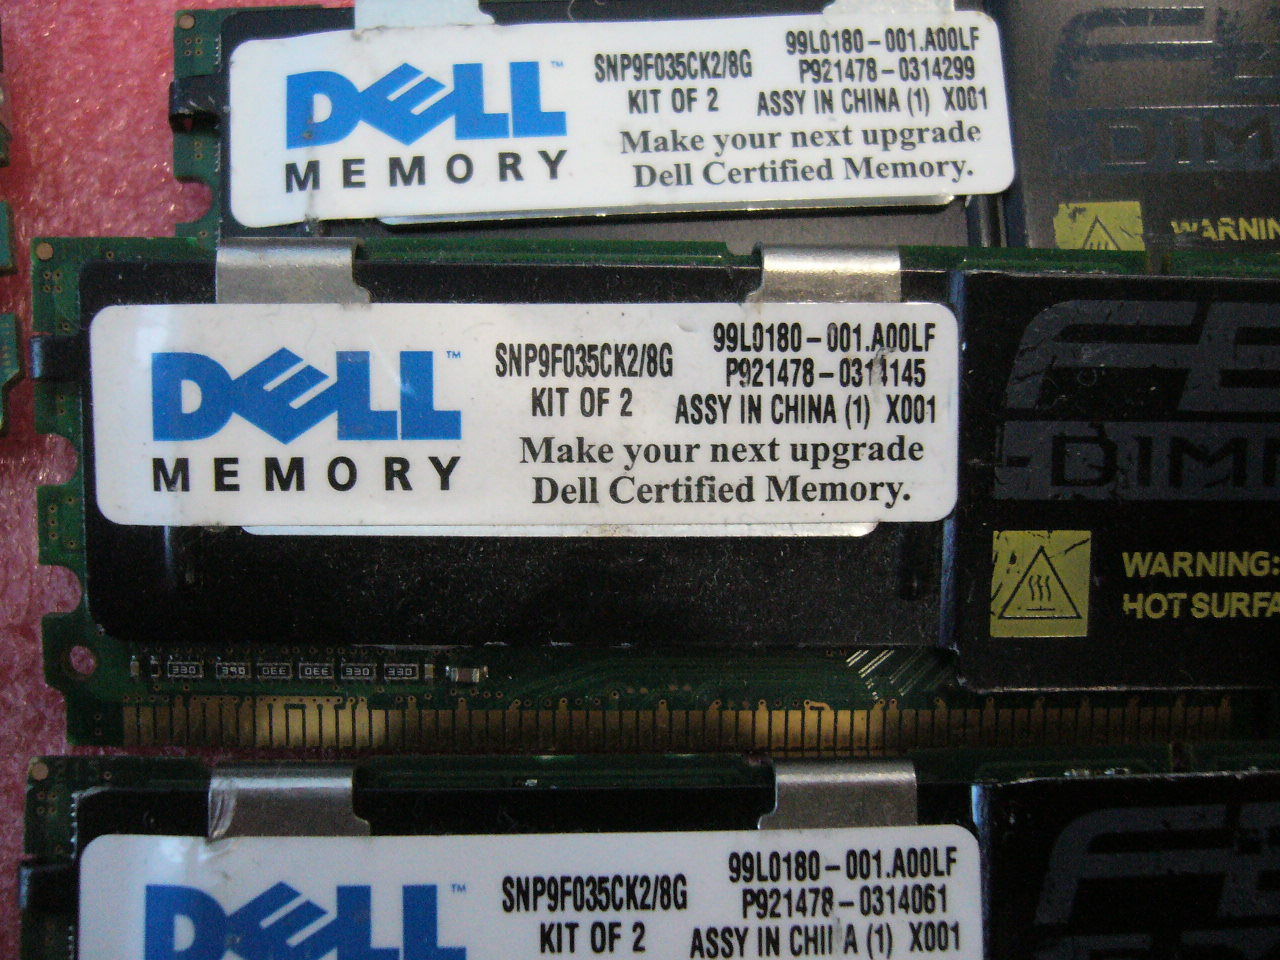 QTY 1x 4GB DDR2 PC2-5300F ECC FBD Server memory Dell SNP9F035C/4G SNP9F035CK2/8G - Click Image to Close